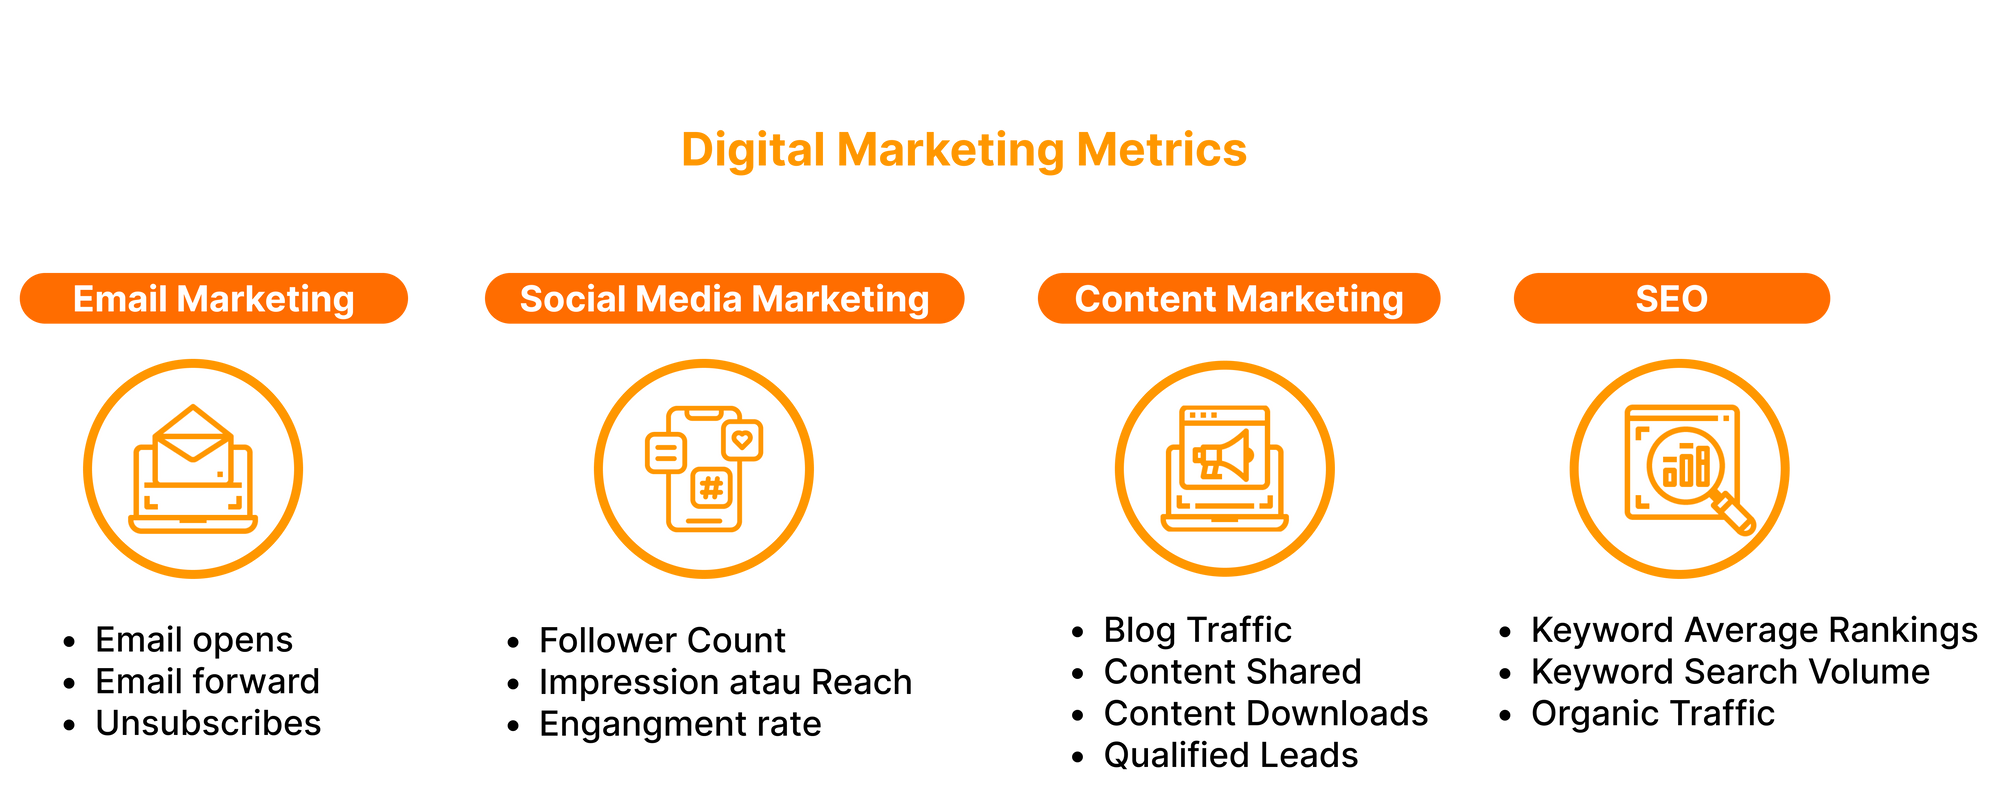 Email Marketing, Social Media Marketing, Content Marketing, dan SEO Metrics